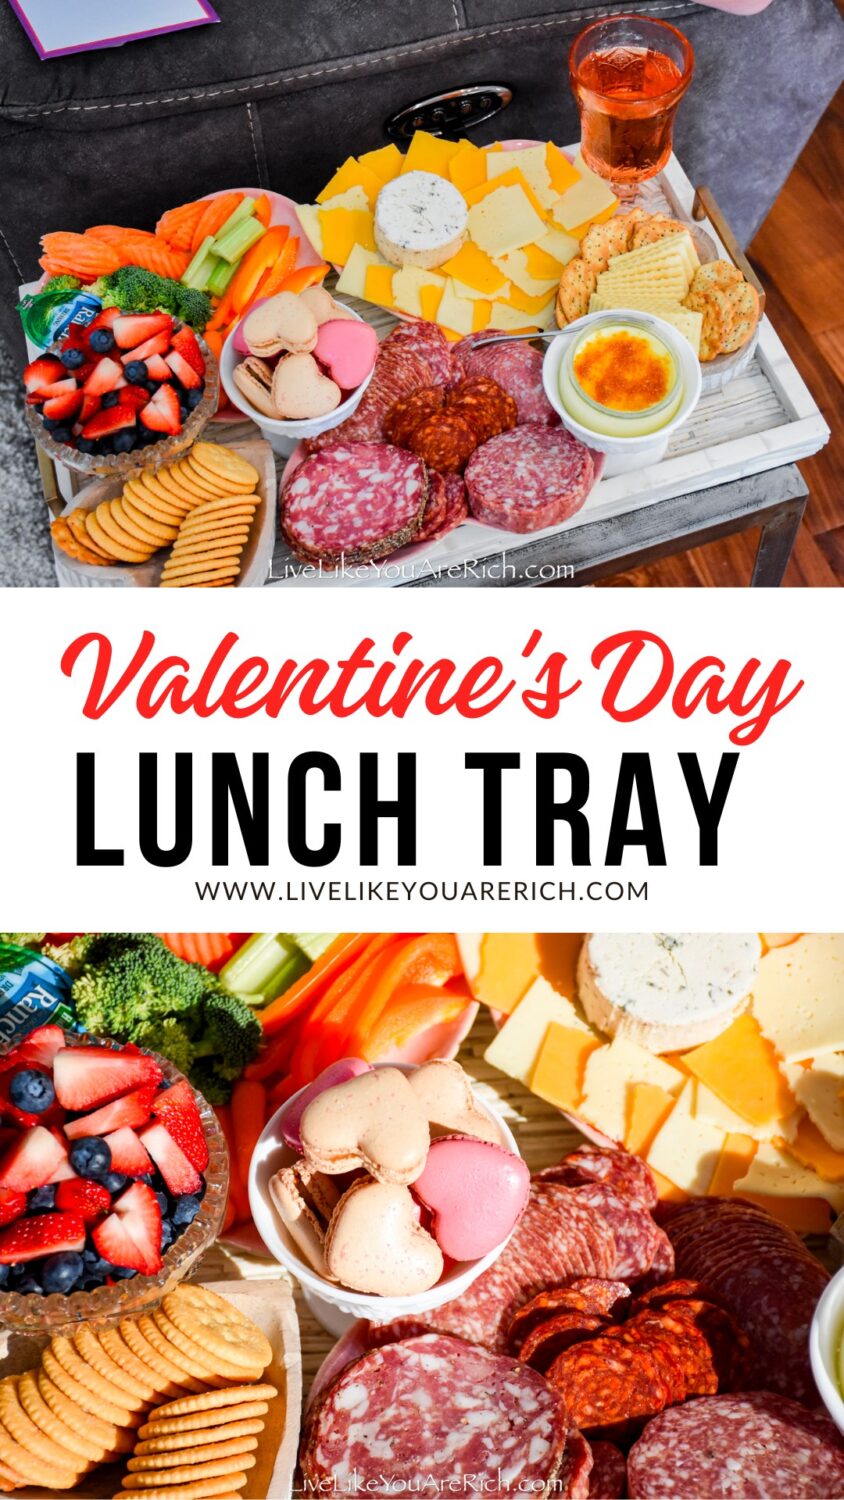 Valentine's Day Lunch Tray